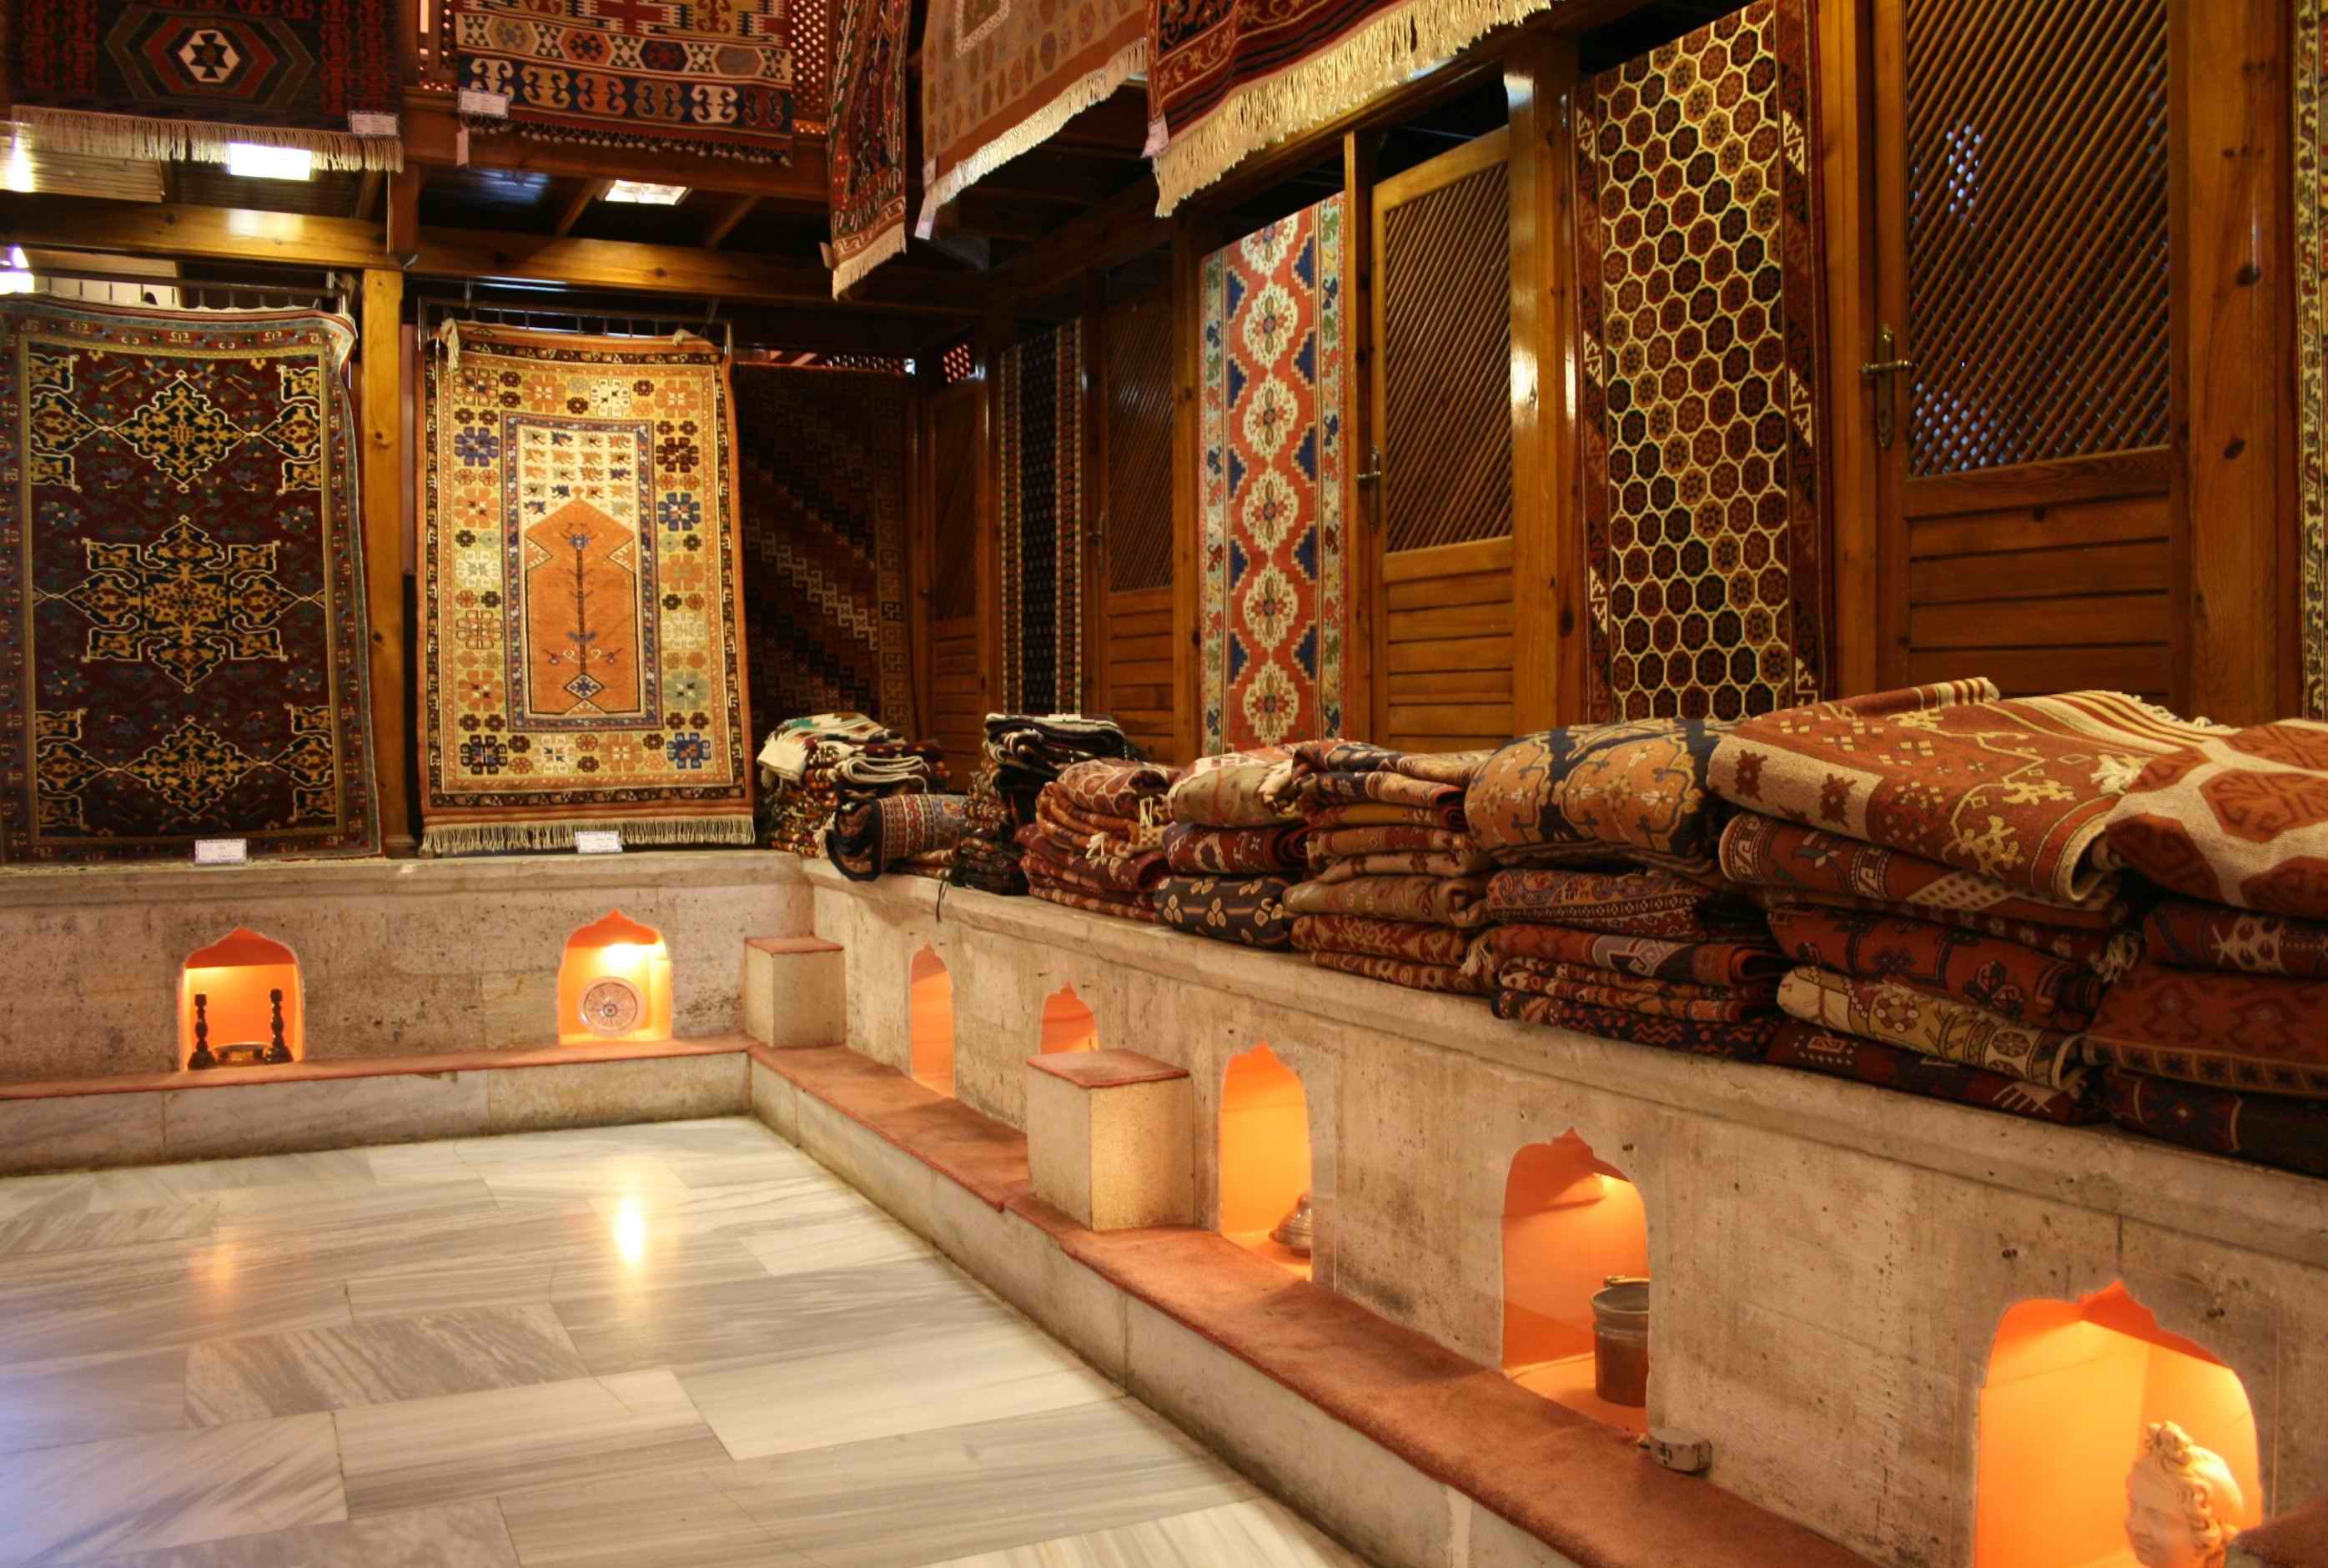 Haseki Hürrem Sultan Hamamı is one of the most extravagant Turkish baths in Turkey